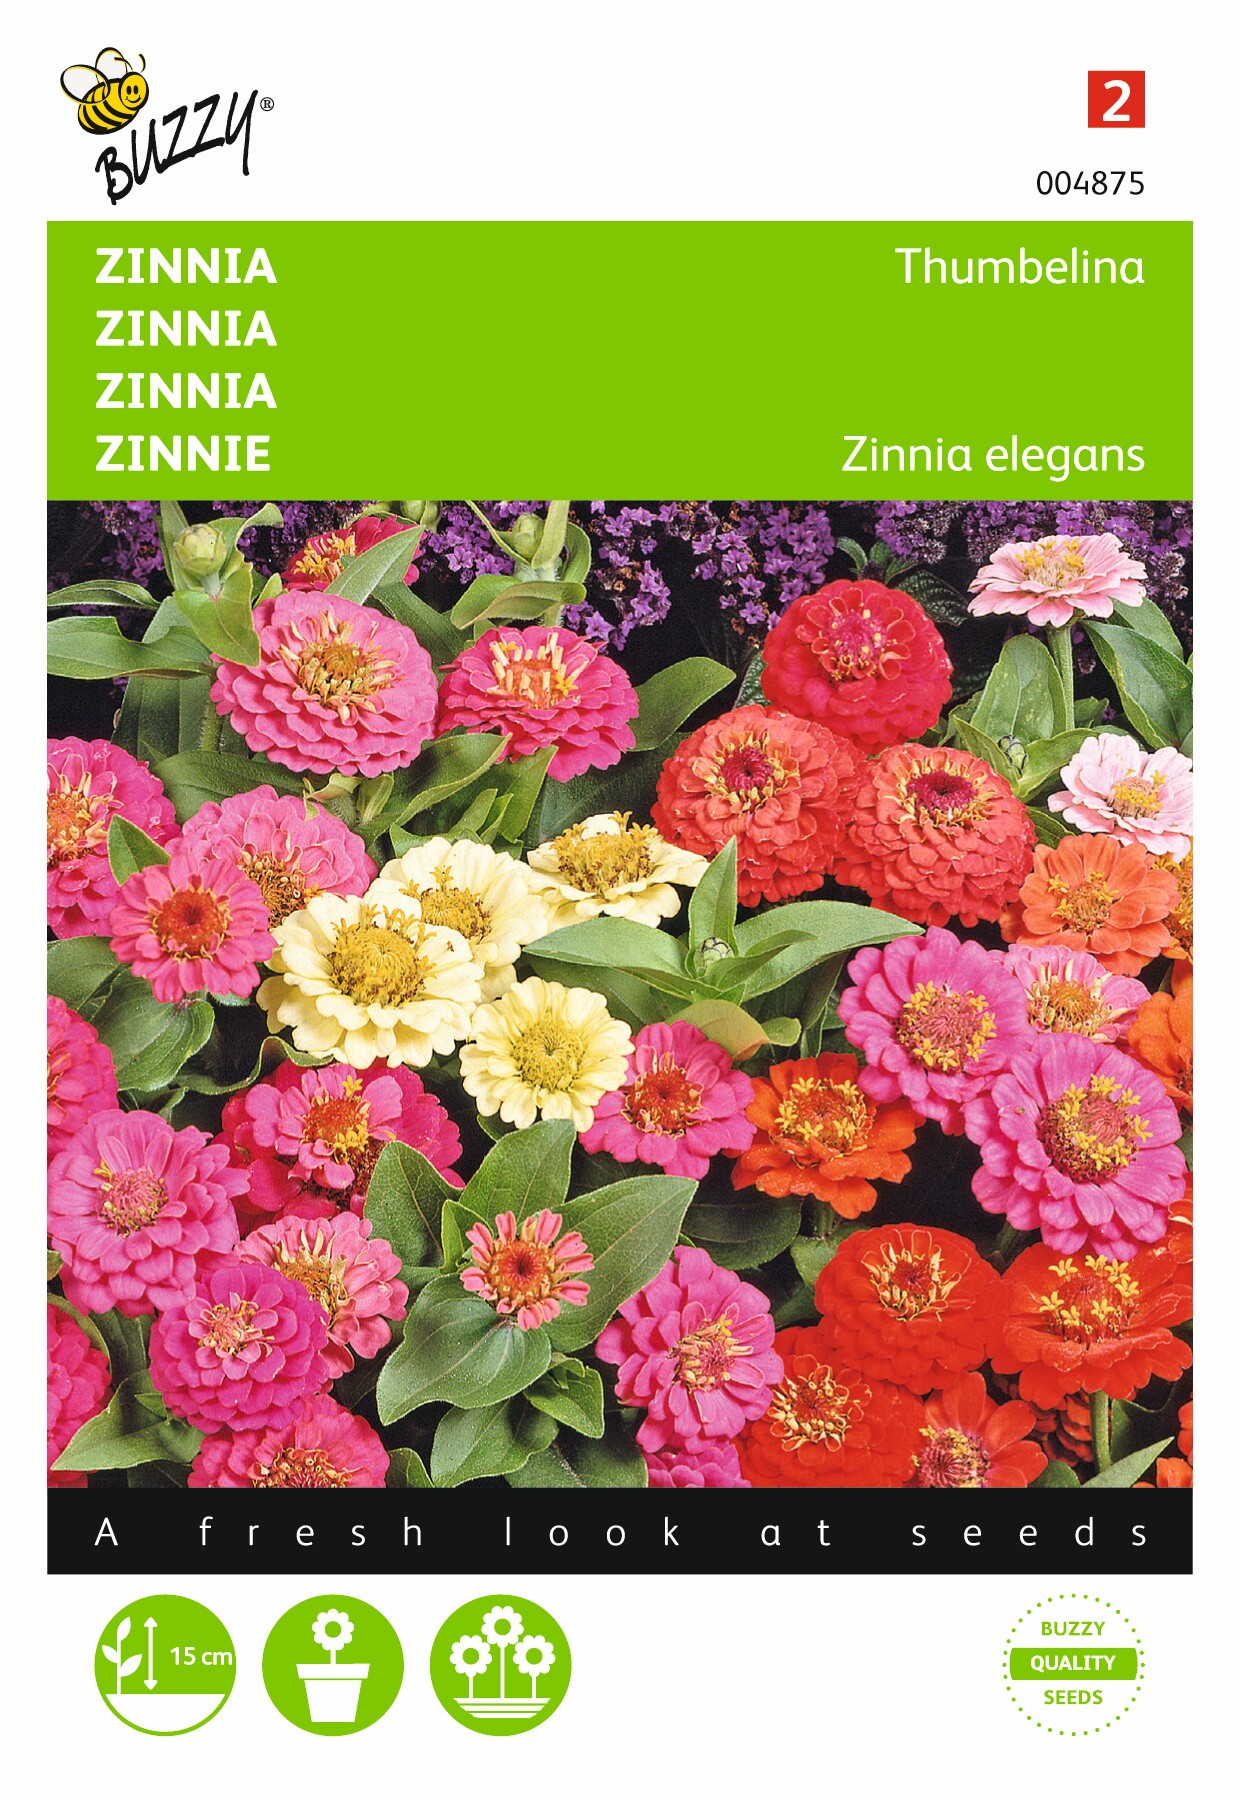 https://www.warentuin.nl/media/catalog/product/1/7/1778711117048756_buzzy_seeds_tuinzaden_buzzy_zinnia_thumbelina_gemengd_1_db6d.jpeg